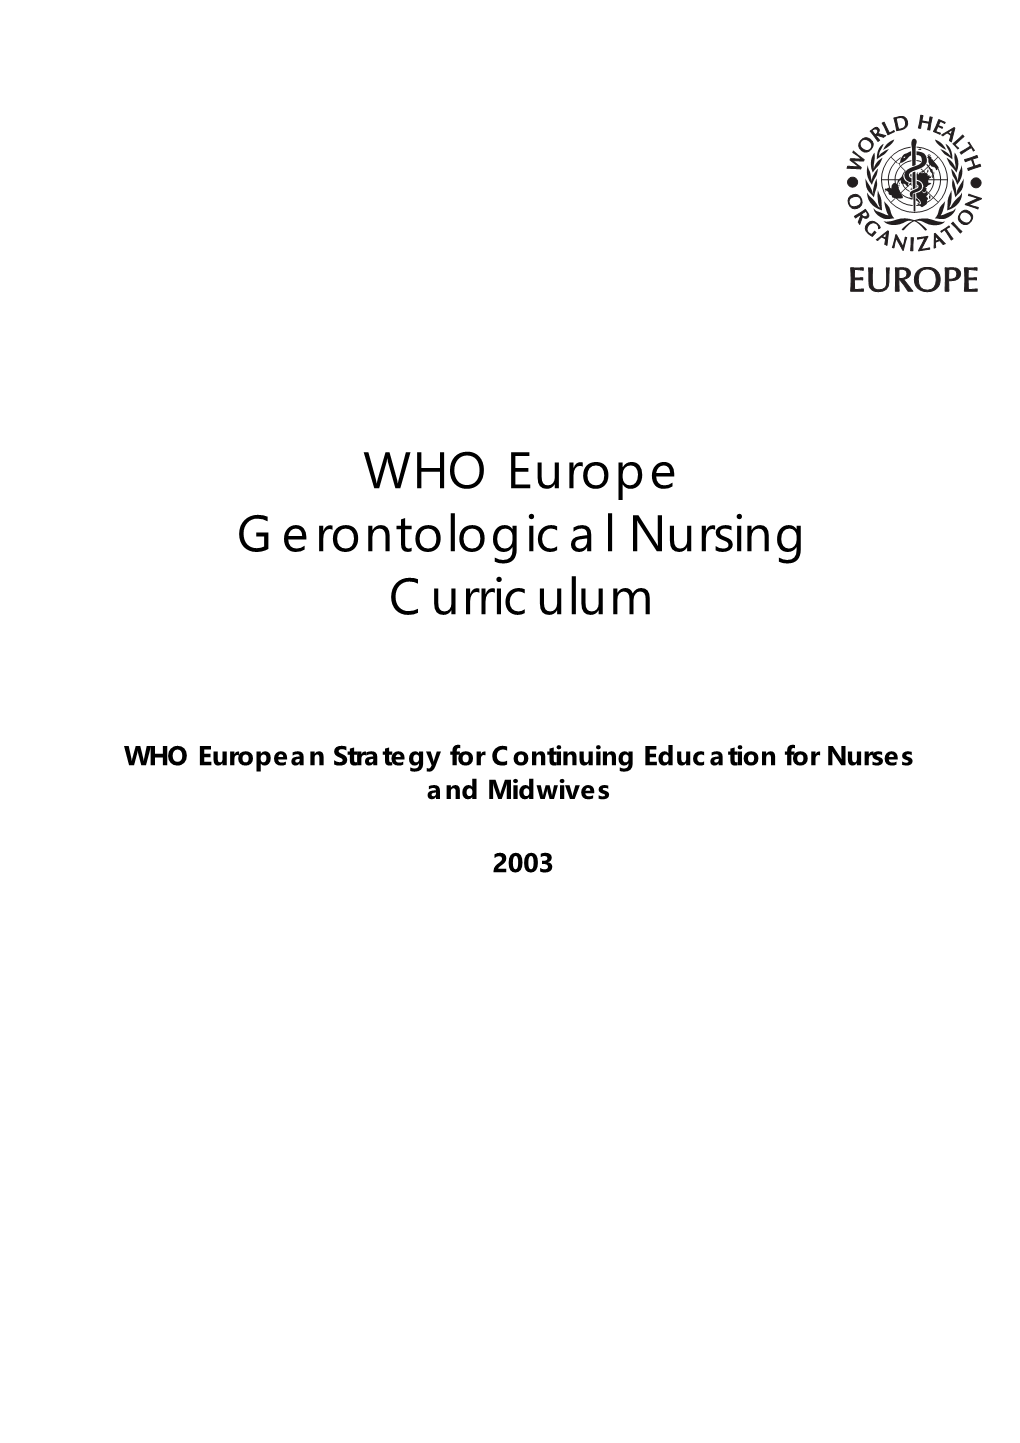 WHO Europe Gerontological Nursing Curriculum